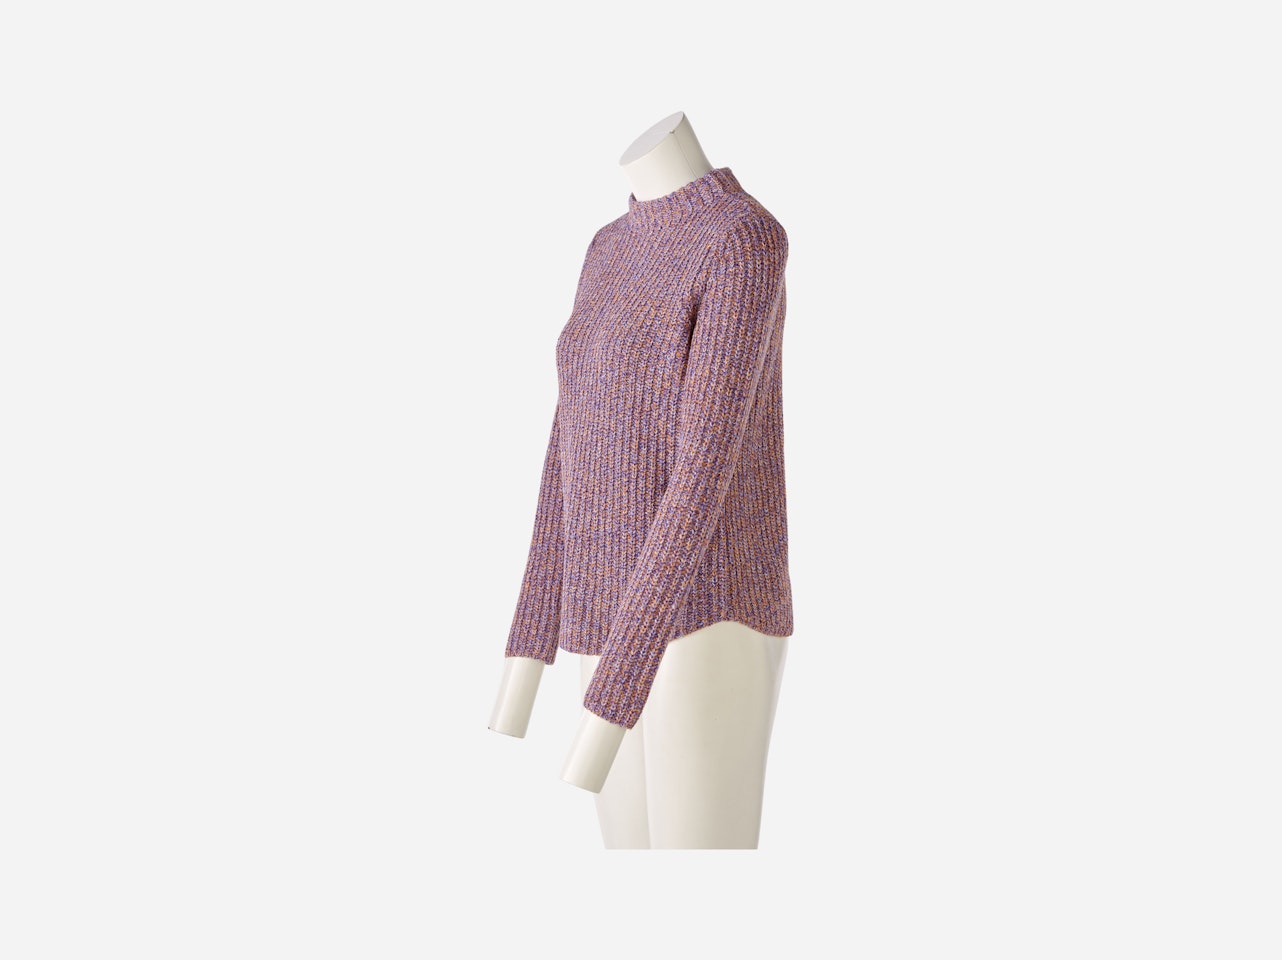 Bild 9 von Knitted jumper with stand-up collar in lilac violett | Oui